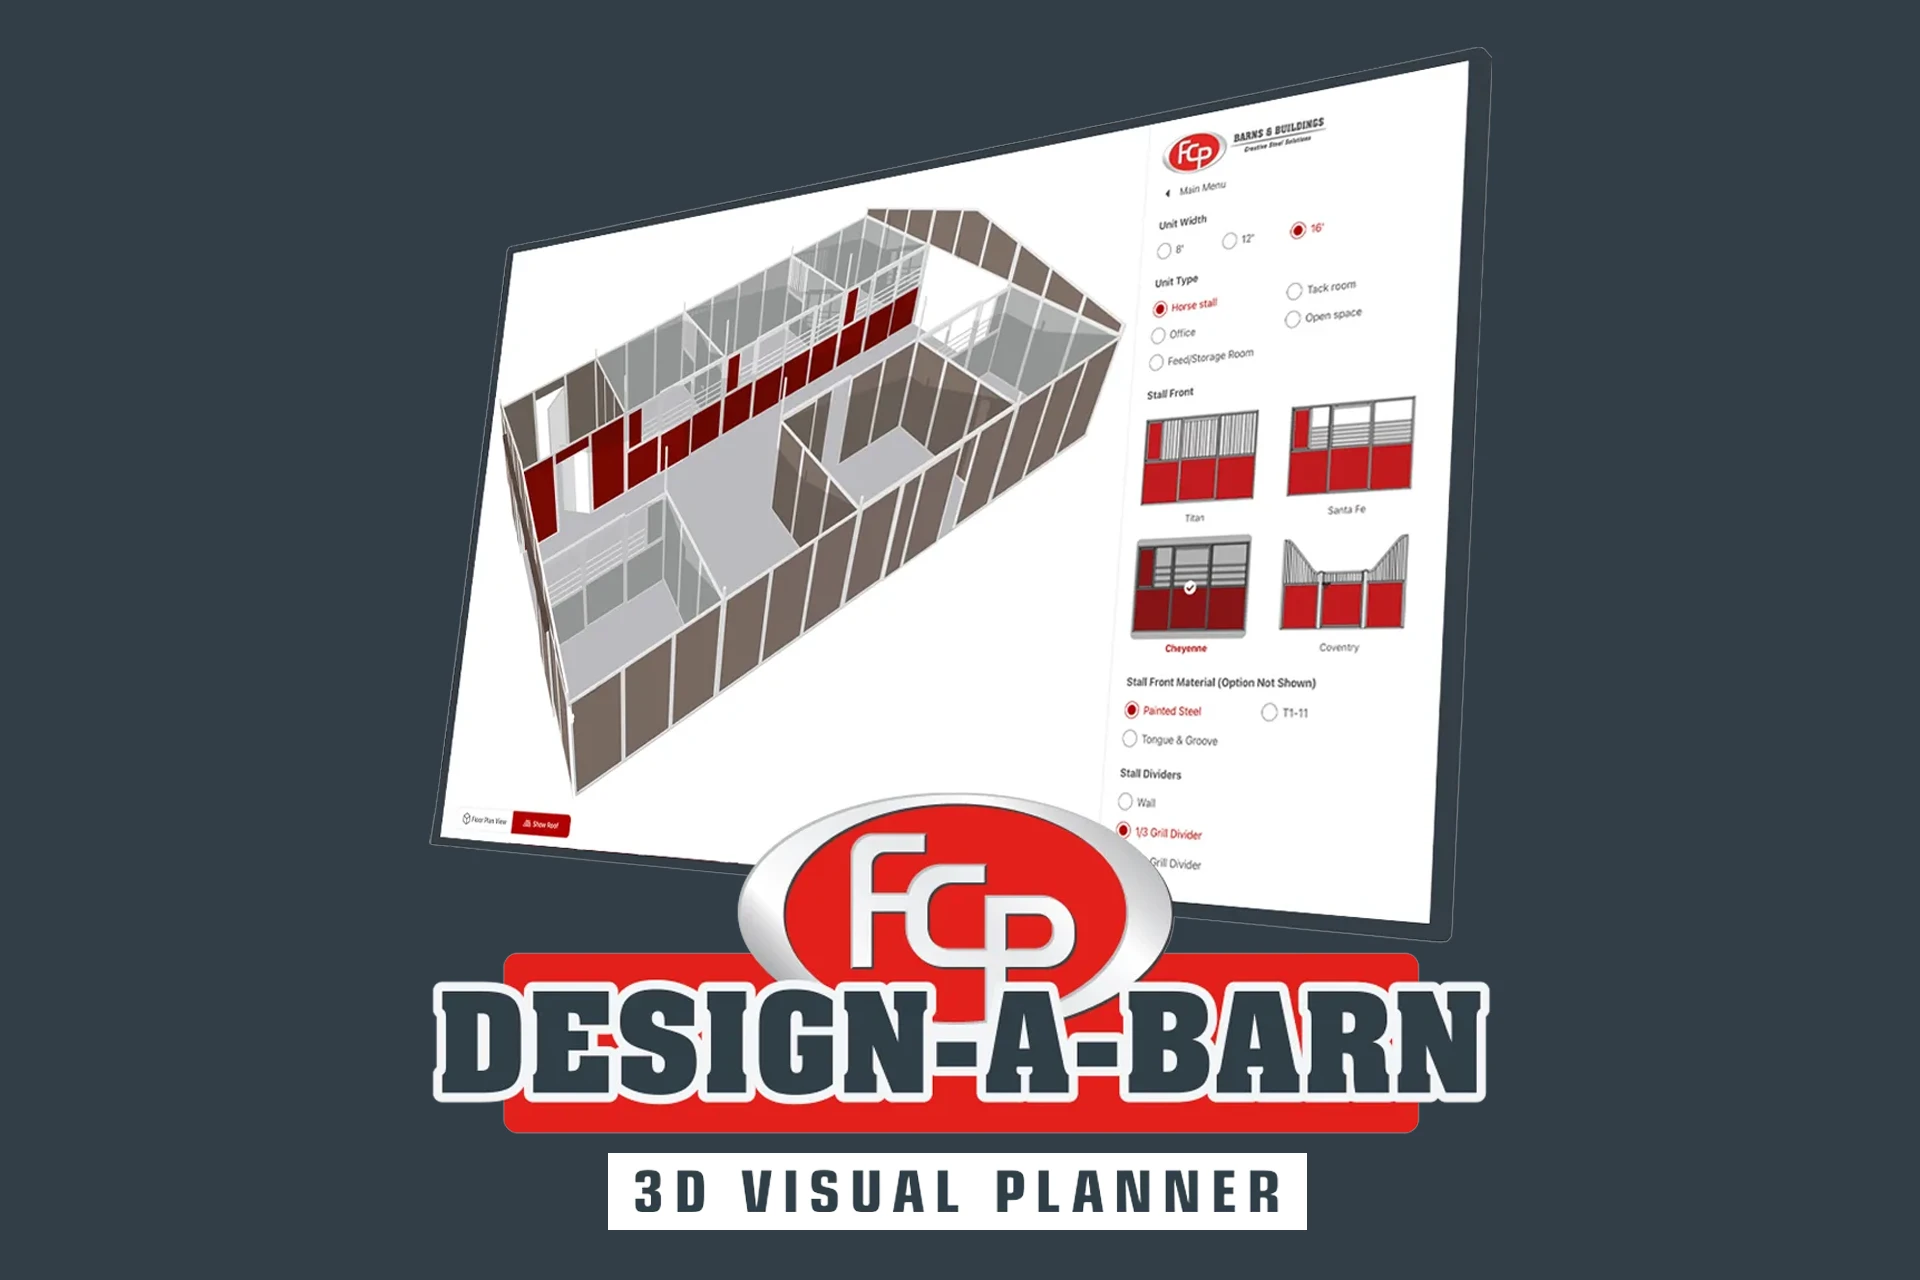 FCP Design-A-Barn